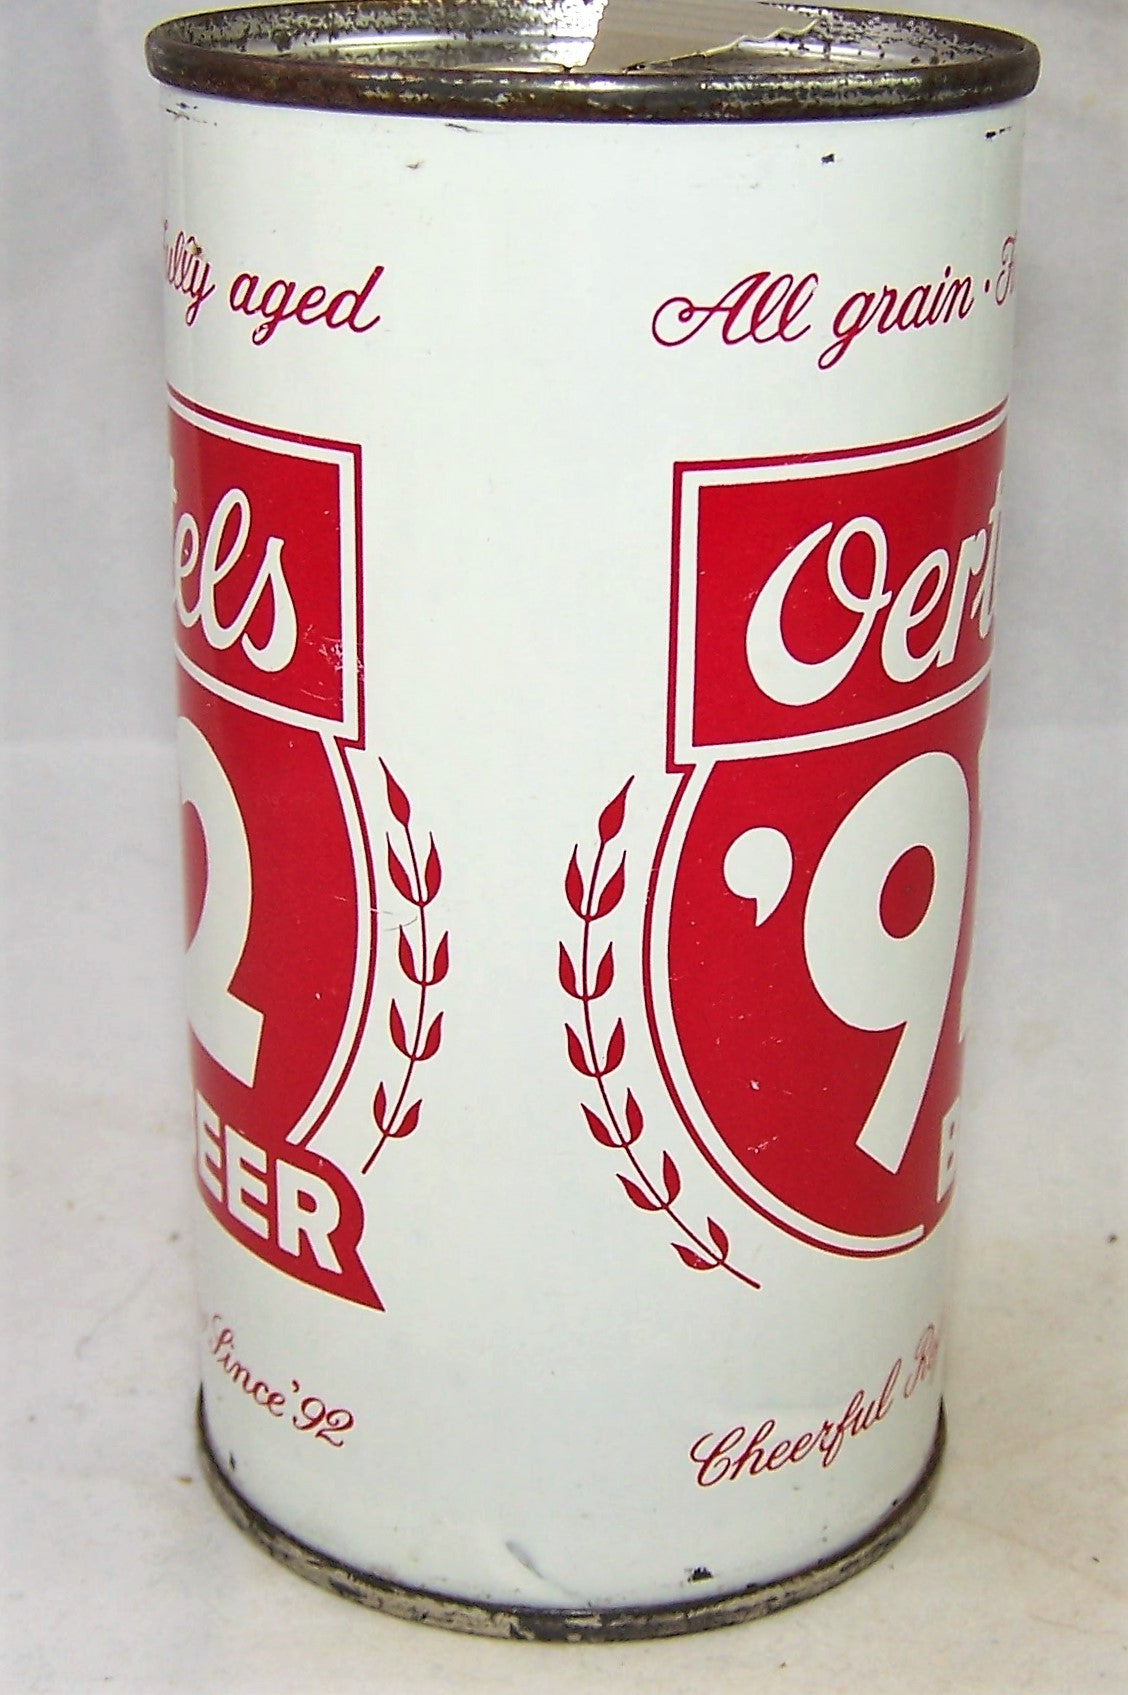 Oertels 92 Beer "Cheerful Refreshment" USBC II 98-39, Grade 1